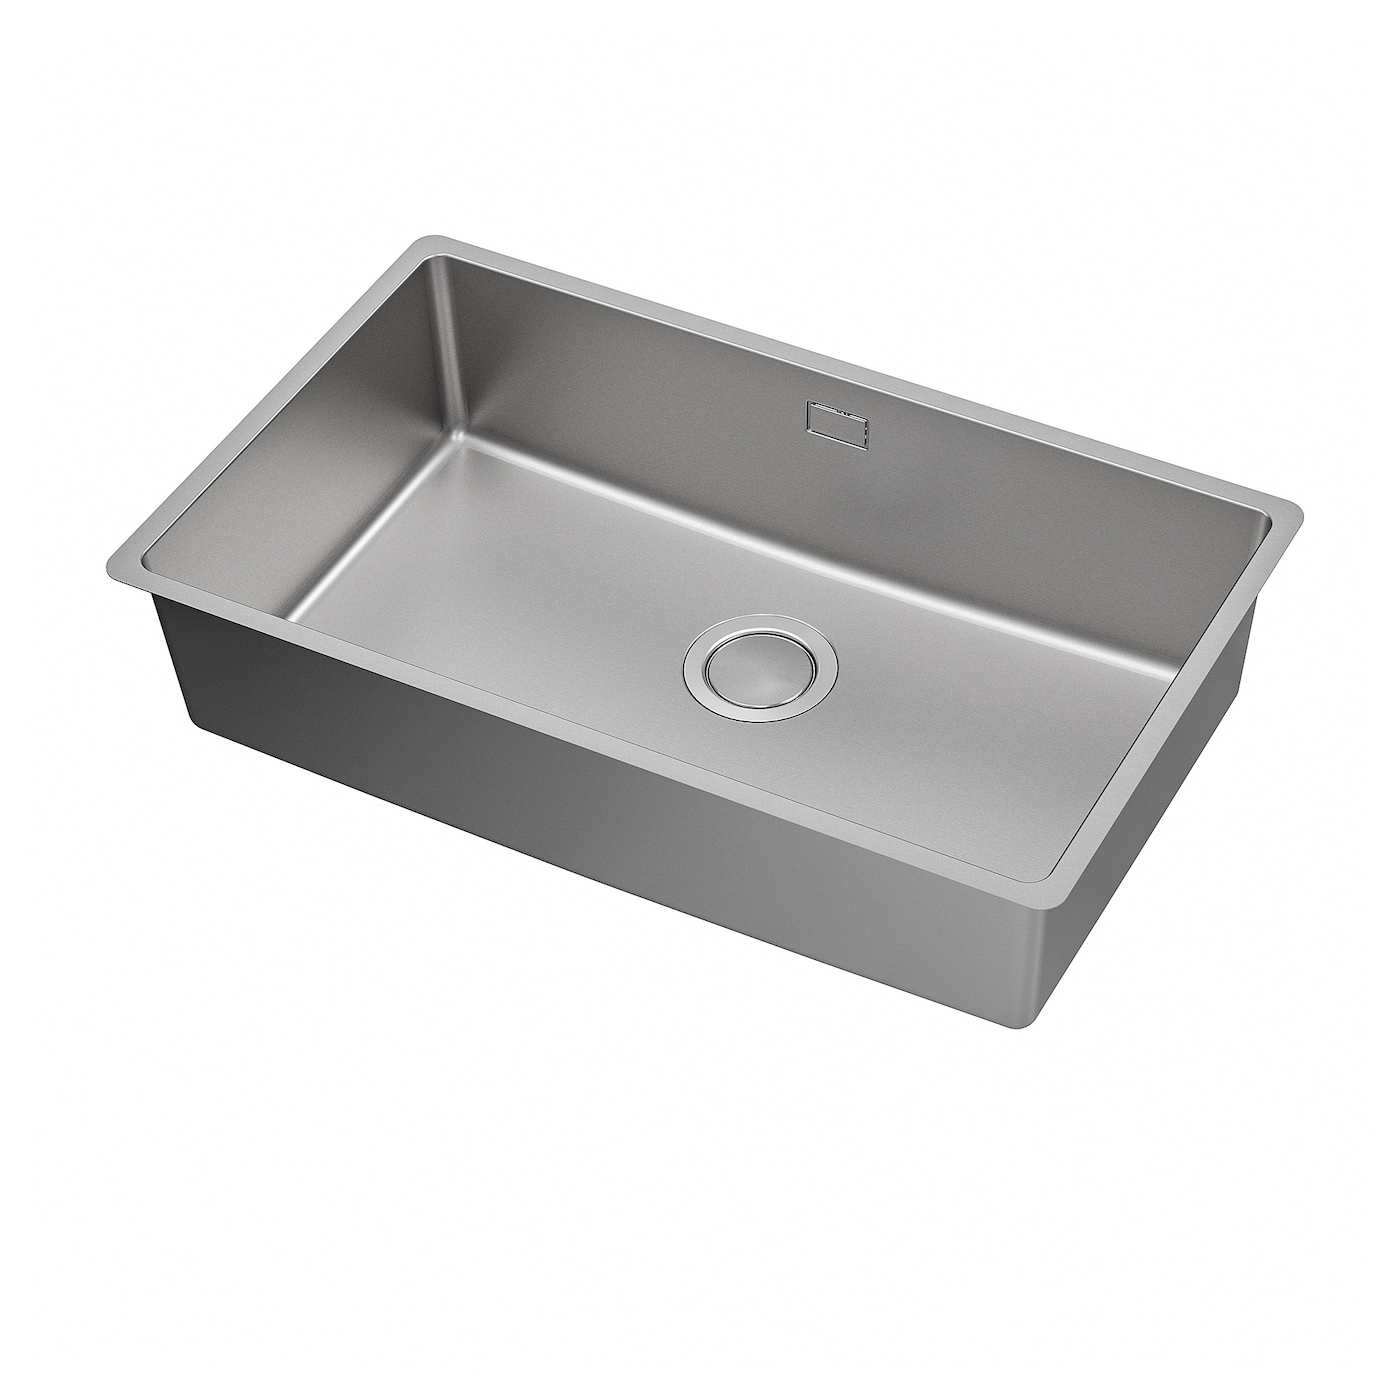 VRESJÖN inset sink, 1 bowl stainless steel - IKEA